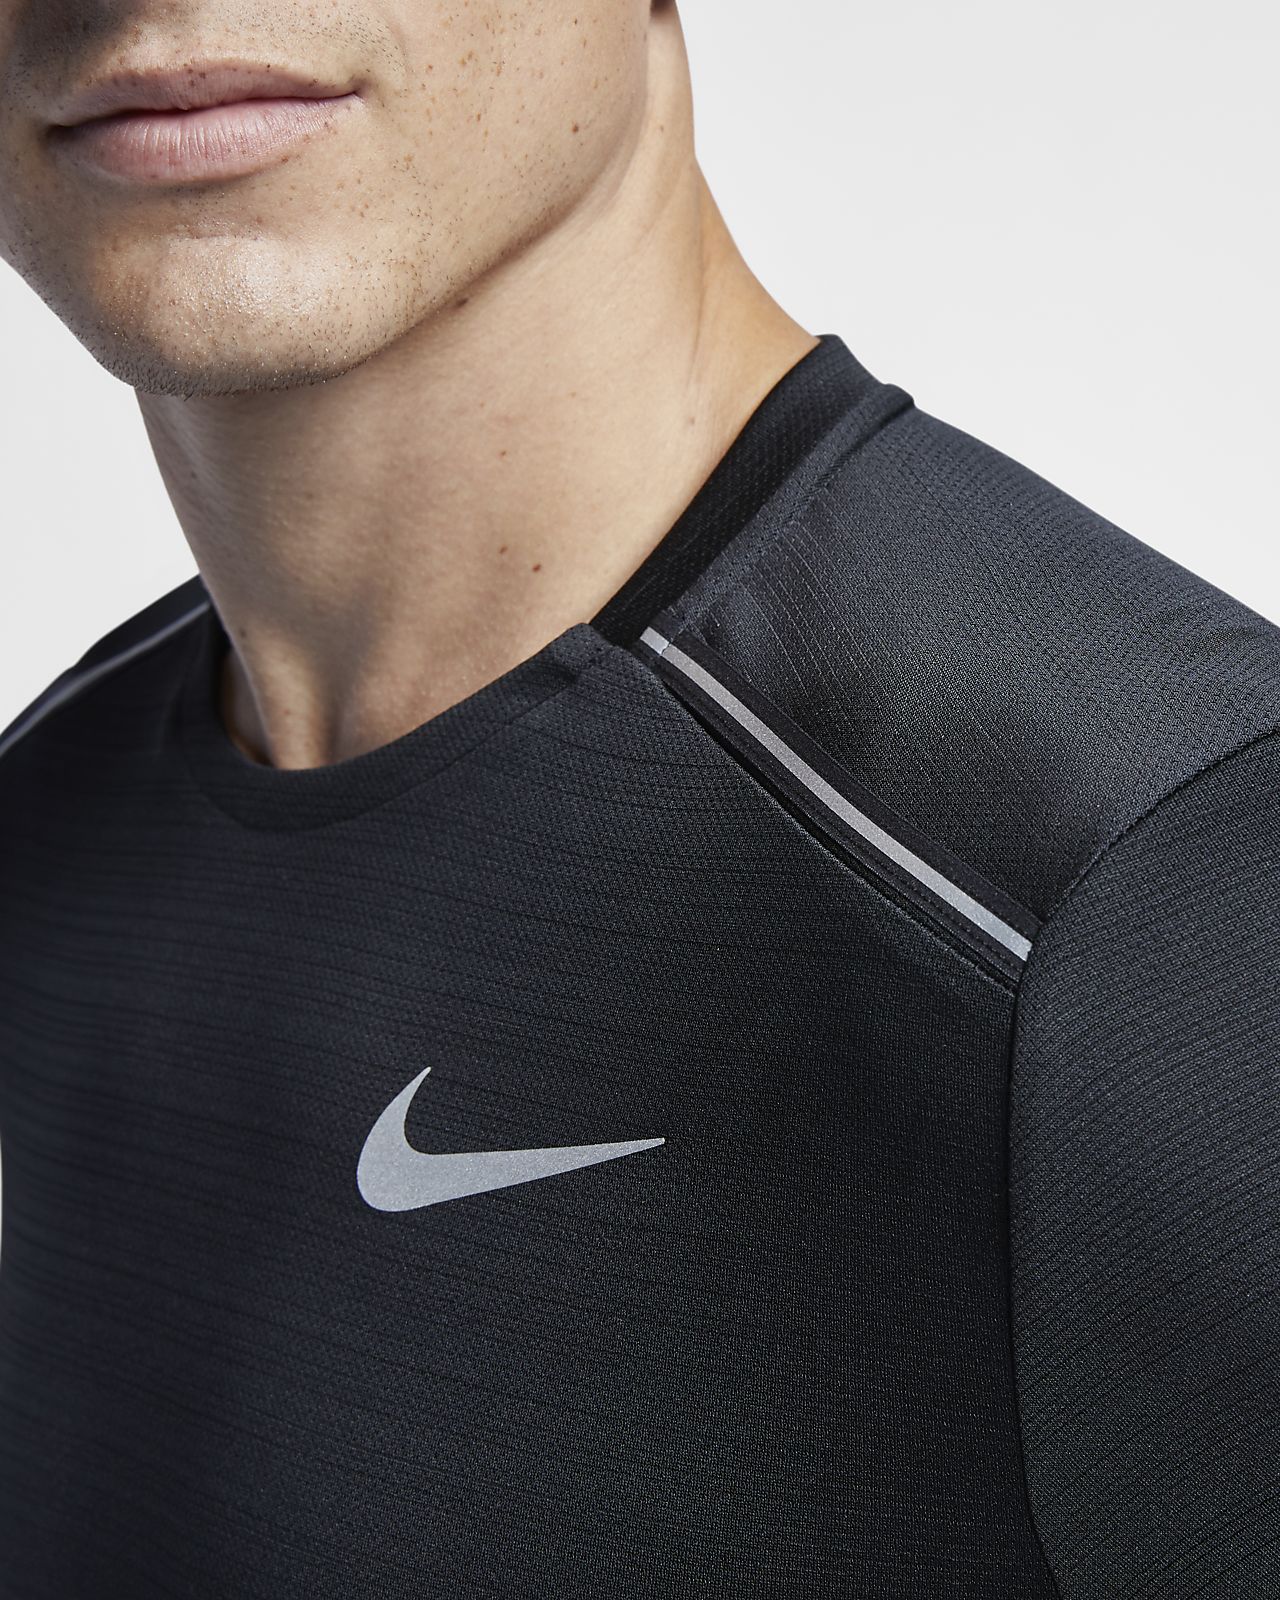 Nike Mens Dri-fit Miler Running Top Tops & Tees Sports & Outdoors